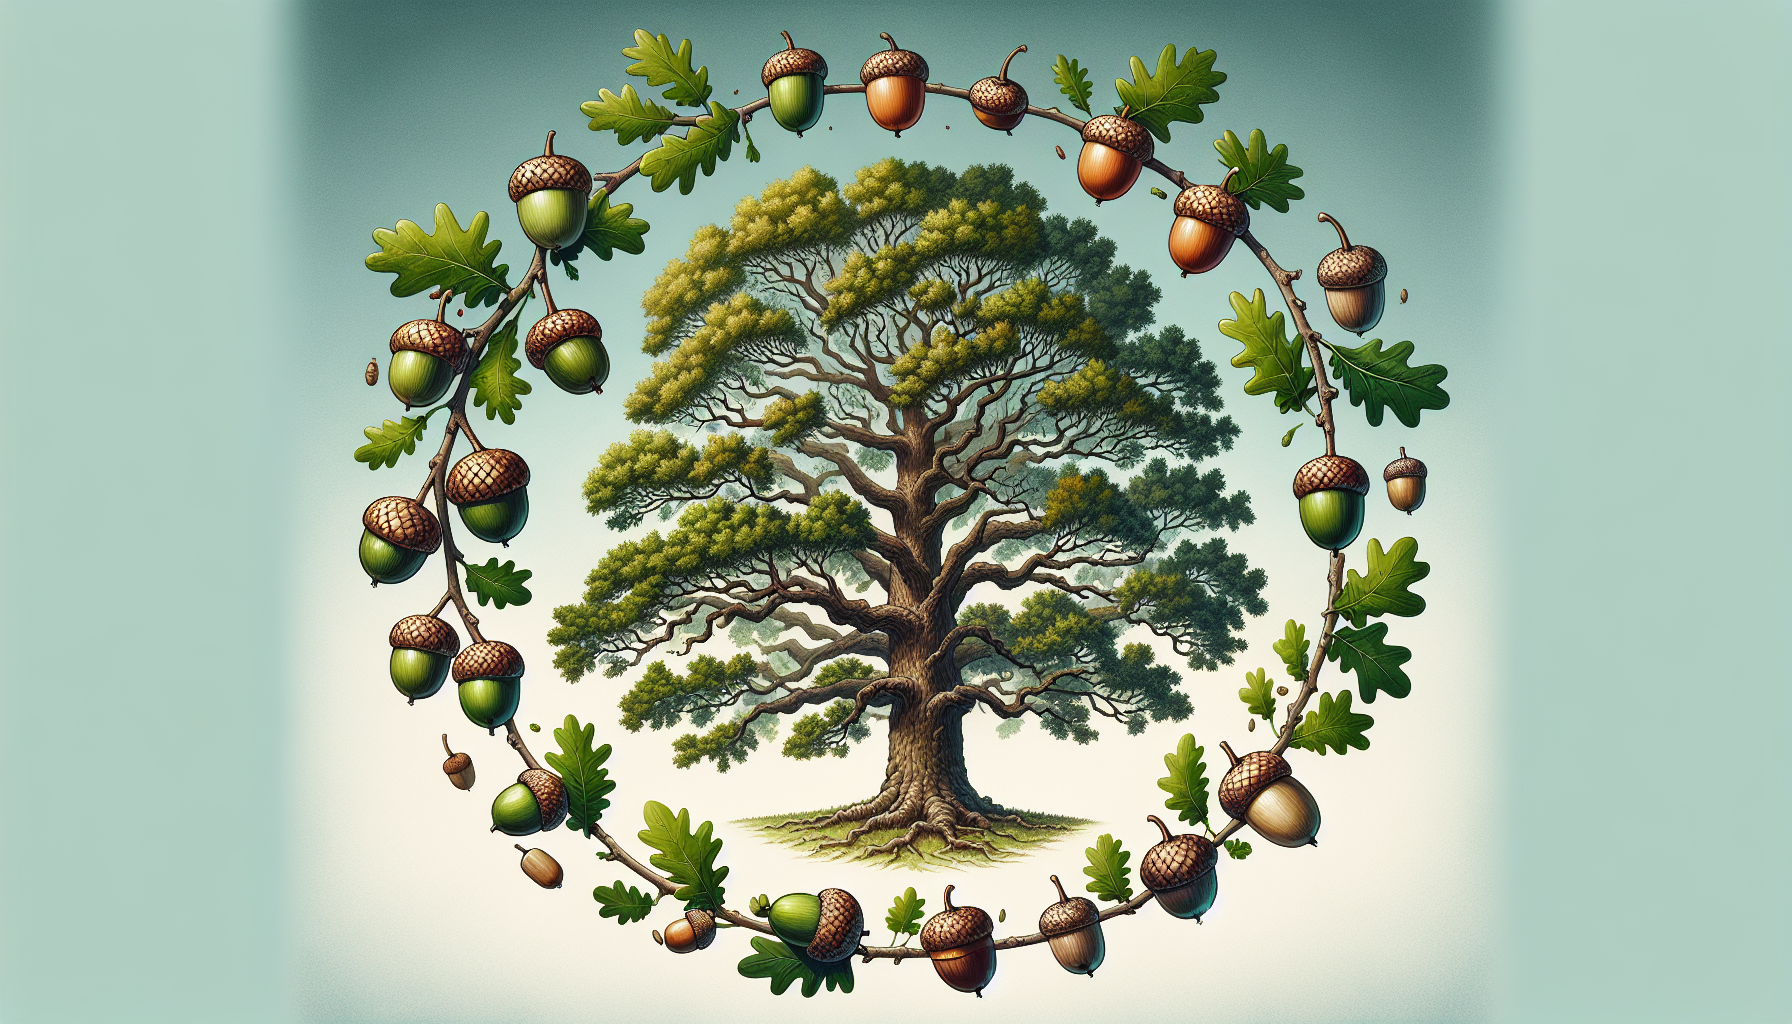 Illustration of an oak tree producing acorns